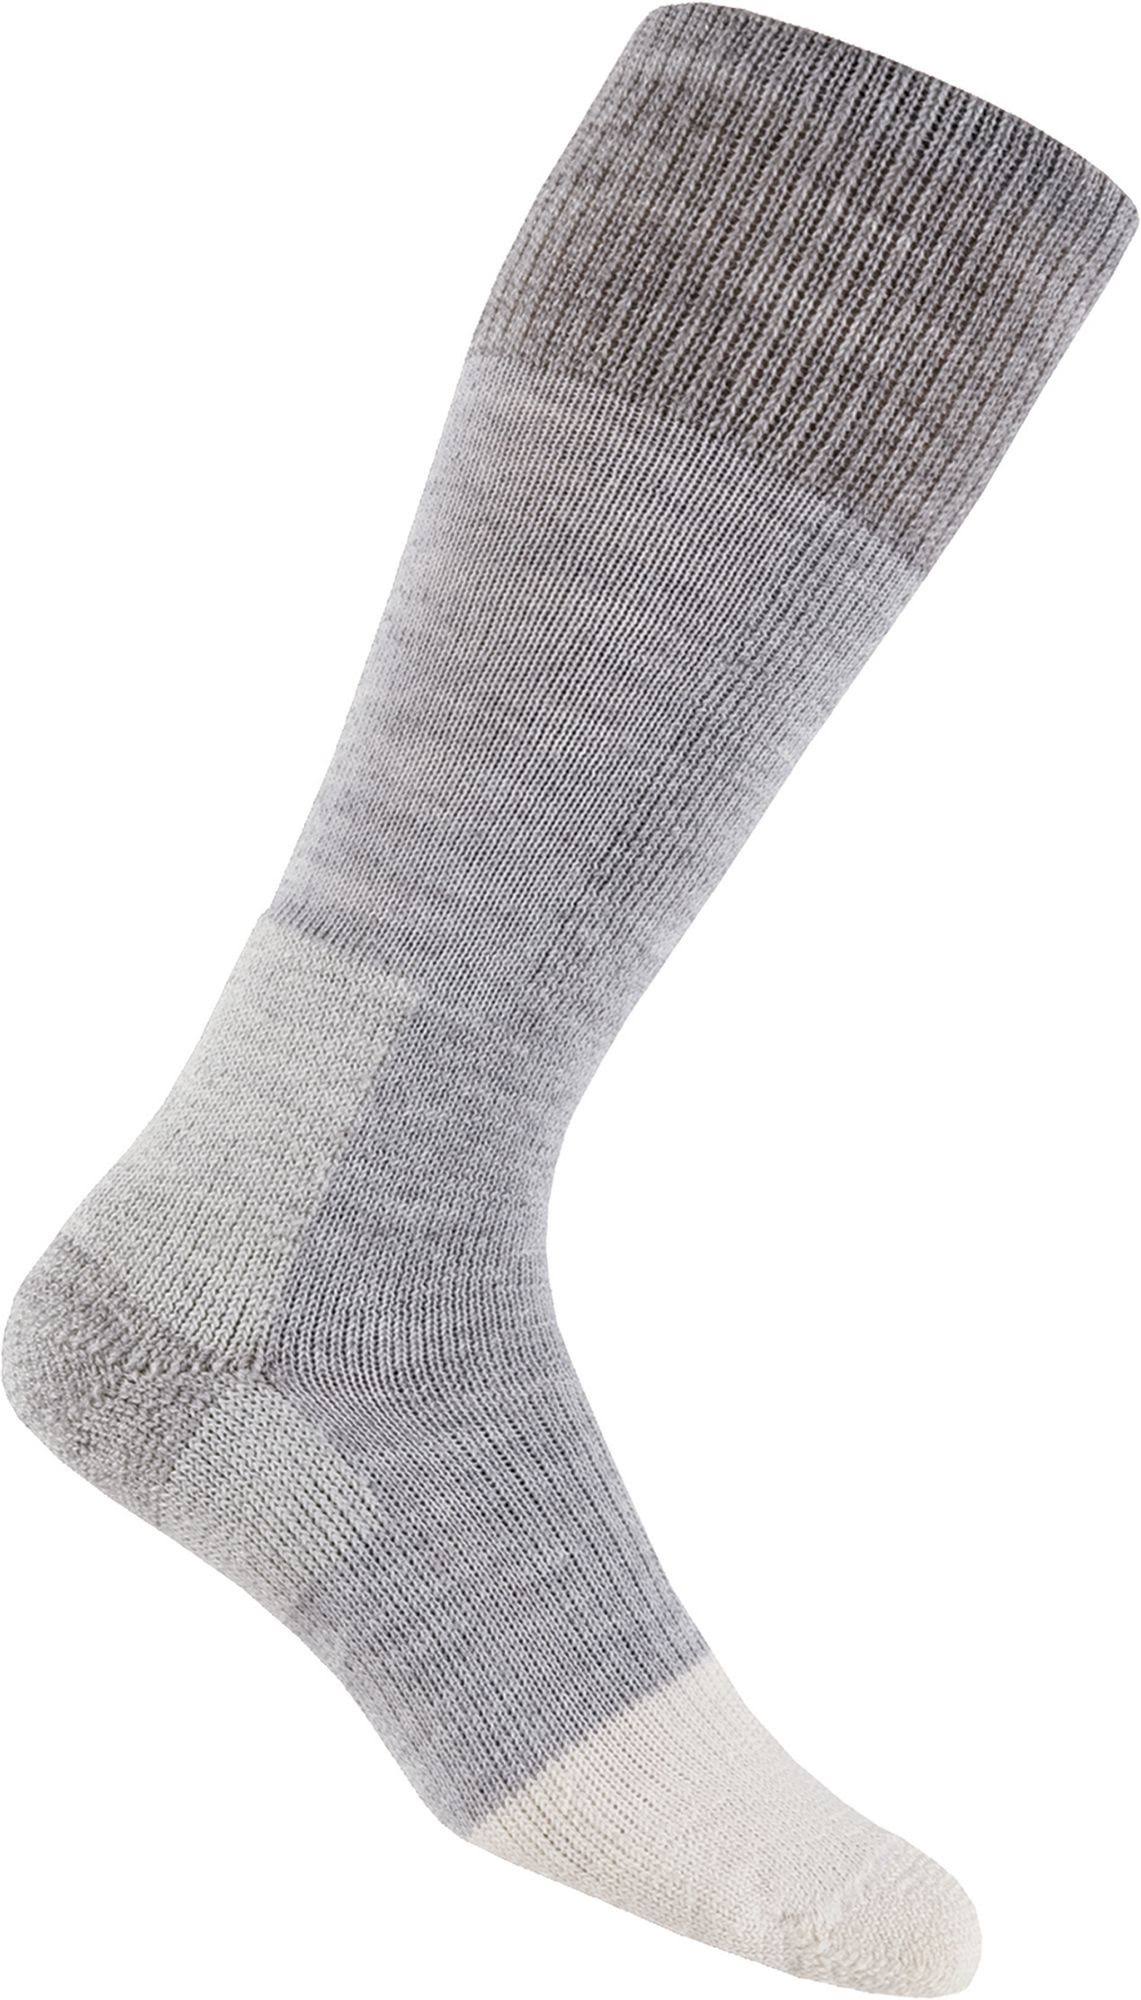 Thorlos Extreme Cold Over Calf Socks, Light Gray